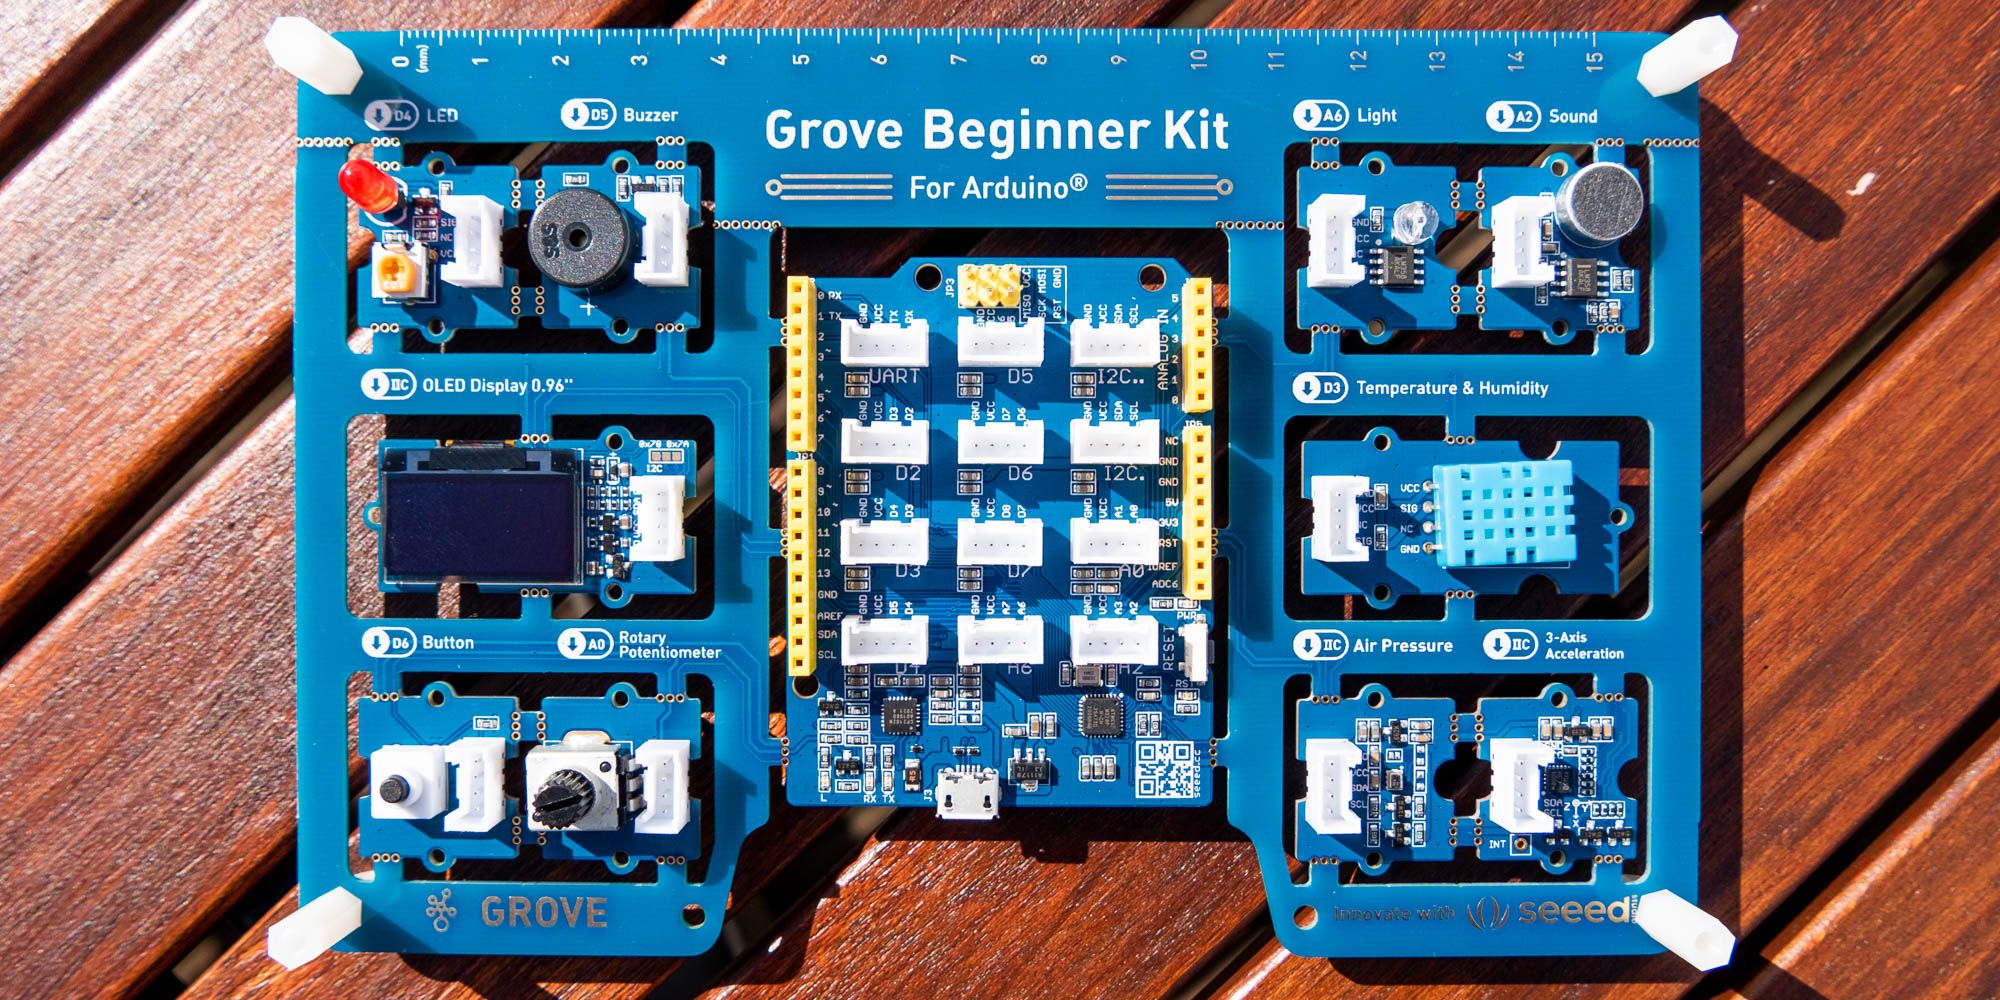 grove beginner kit box contents